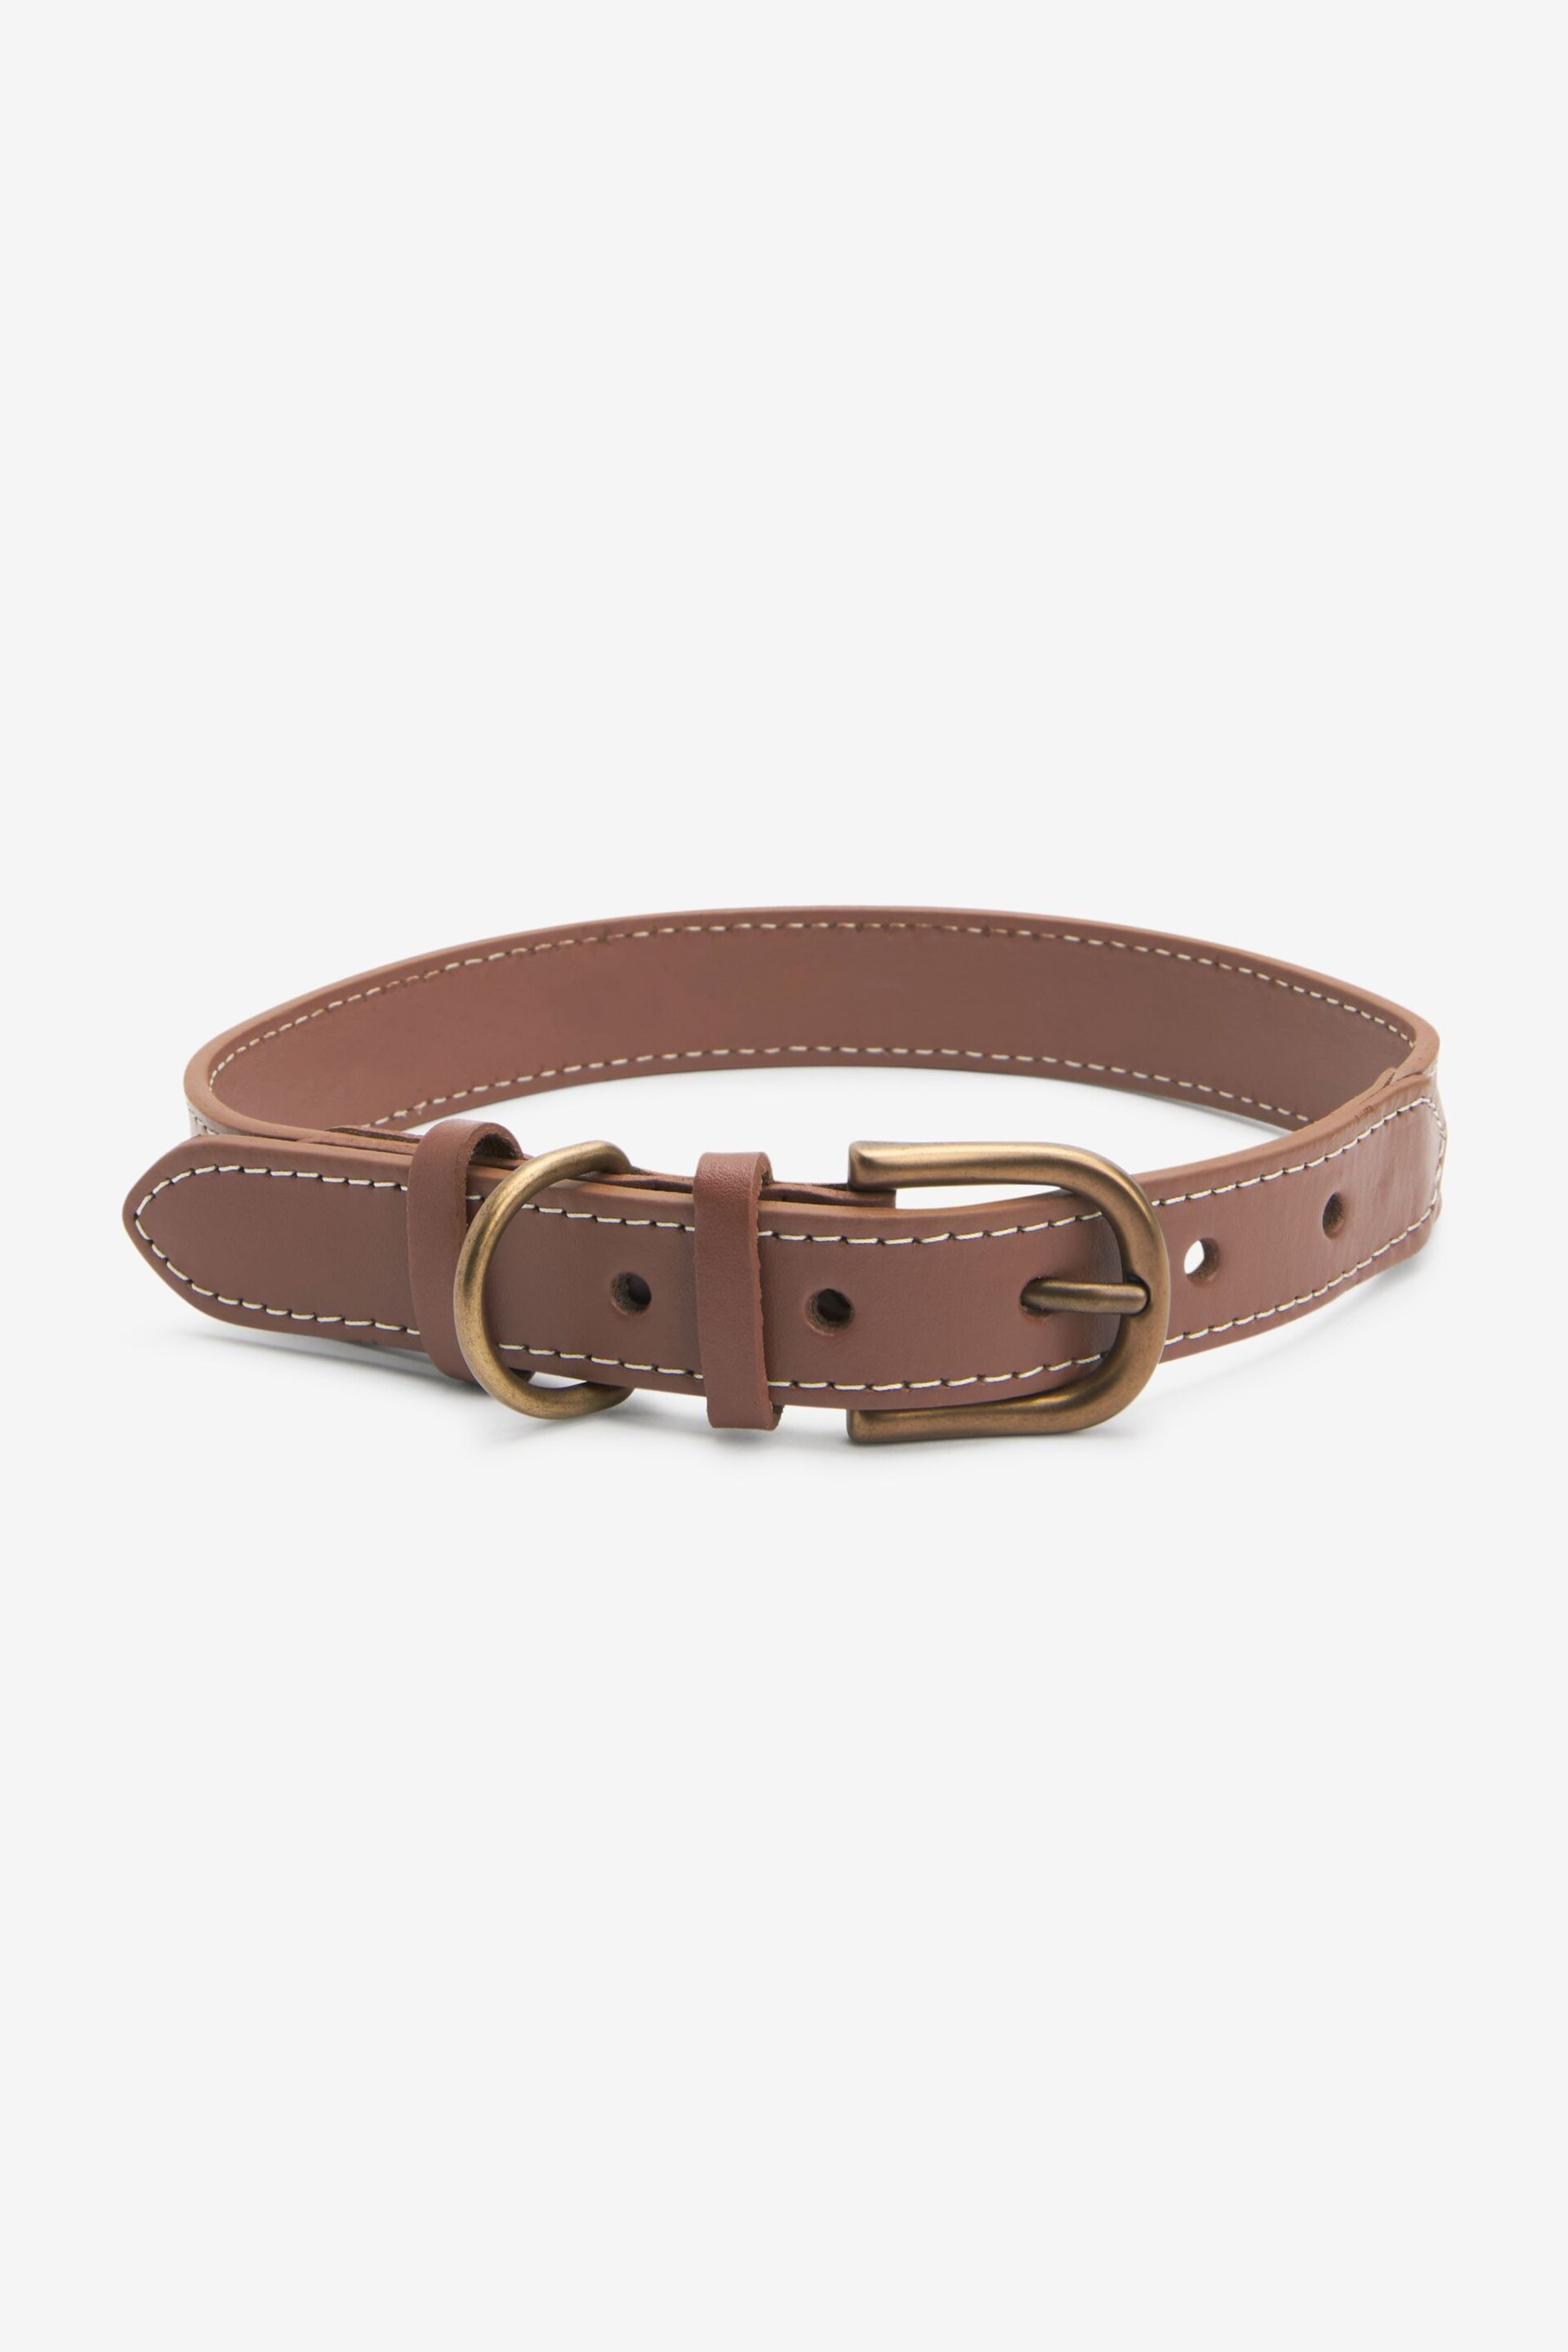 Tan Brown Leather Dog Collar - Image 3 of 5